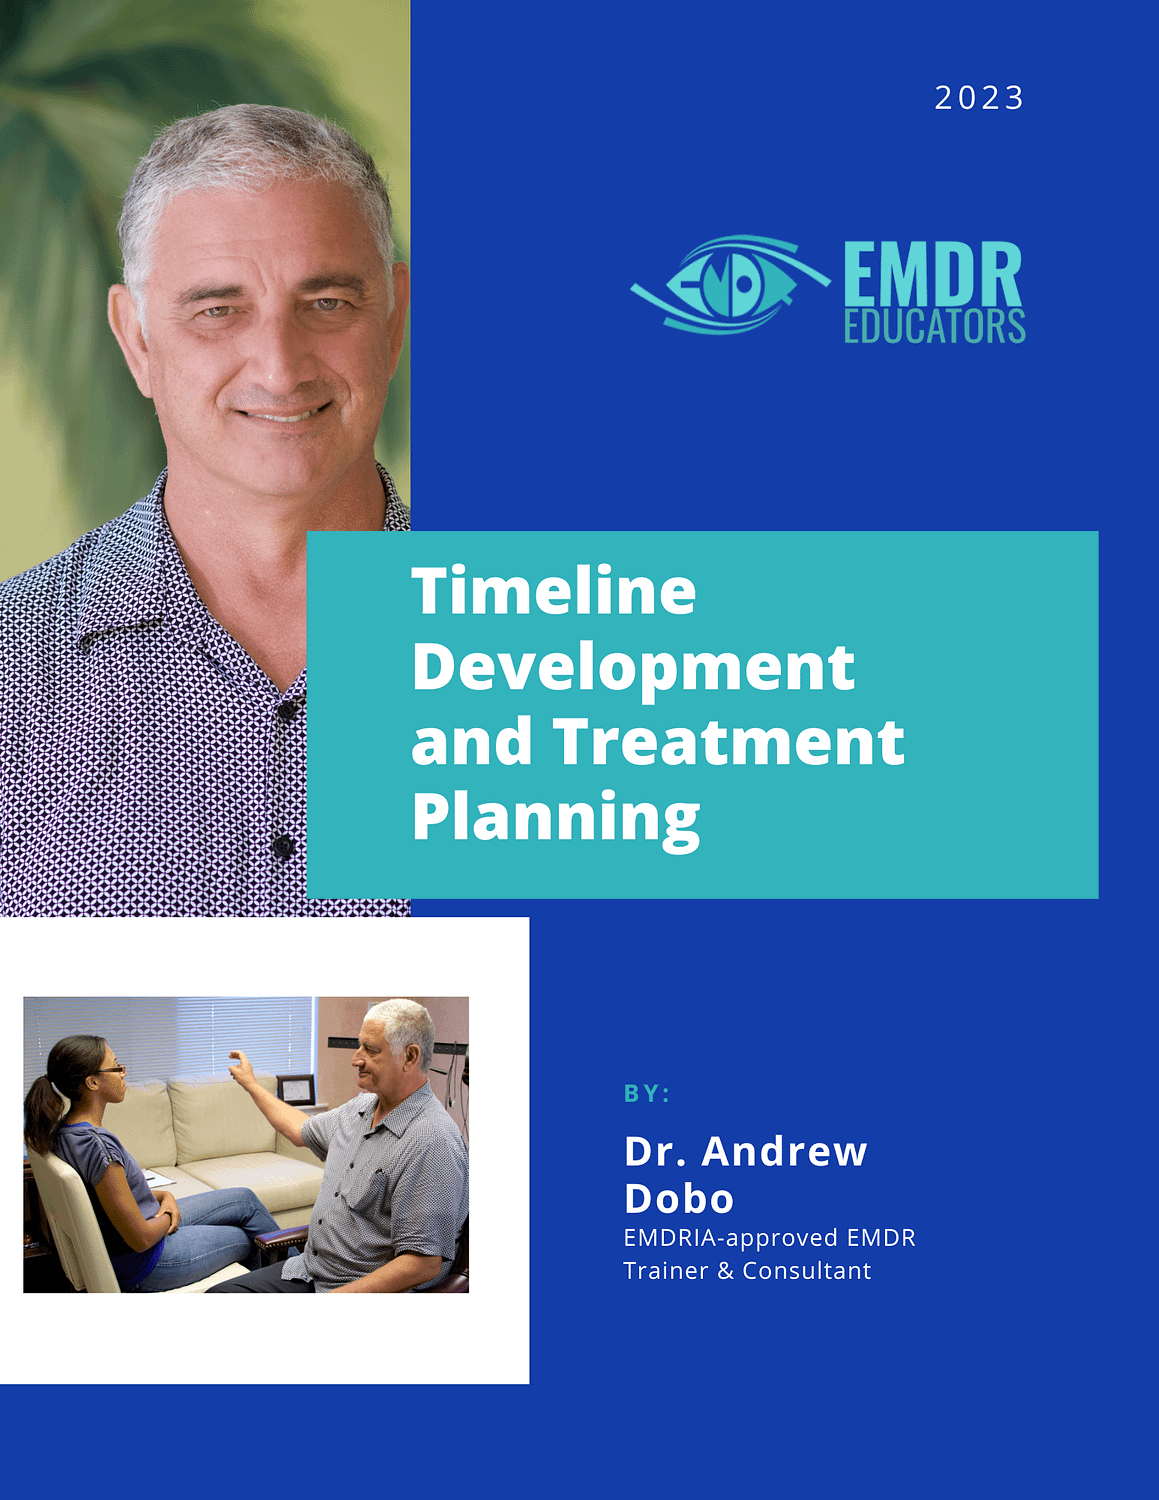 EMDR Timeline and Treatment Plan Development Guide